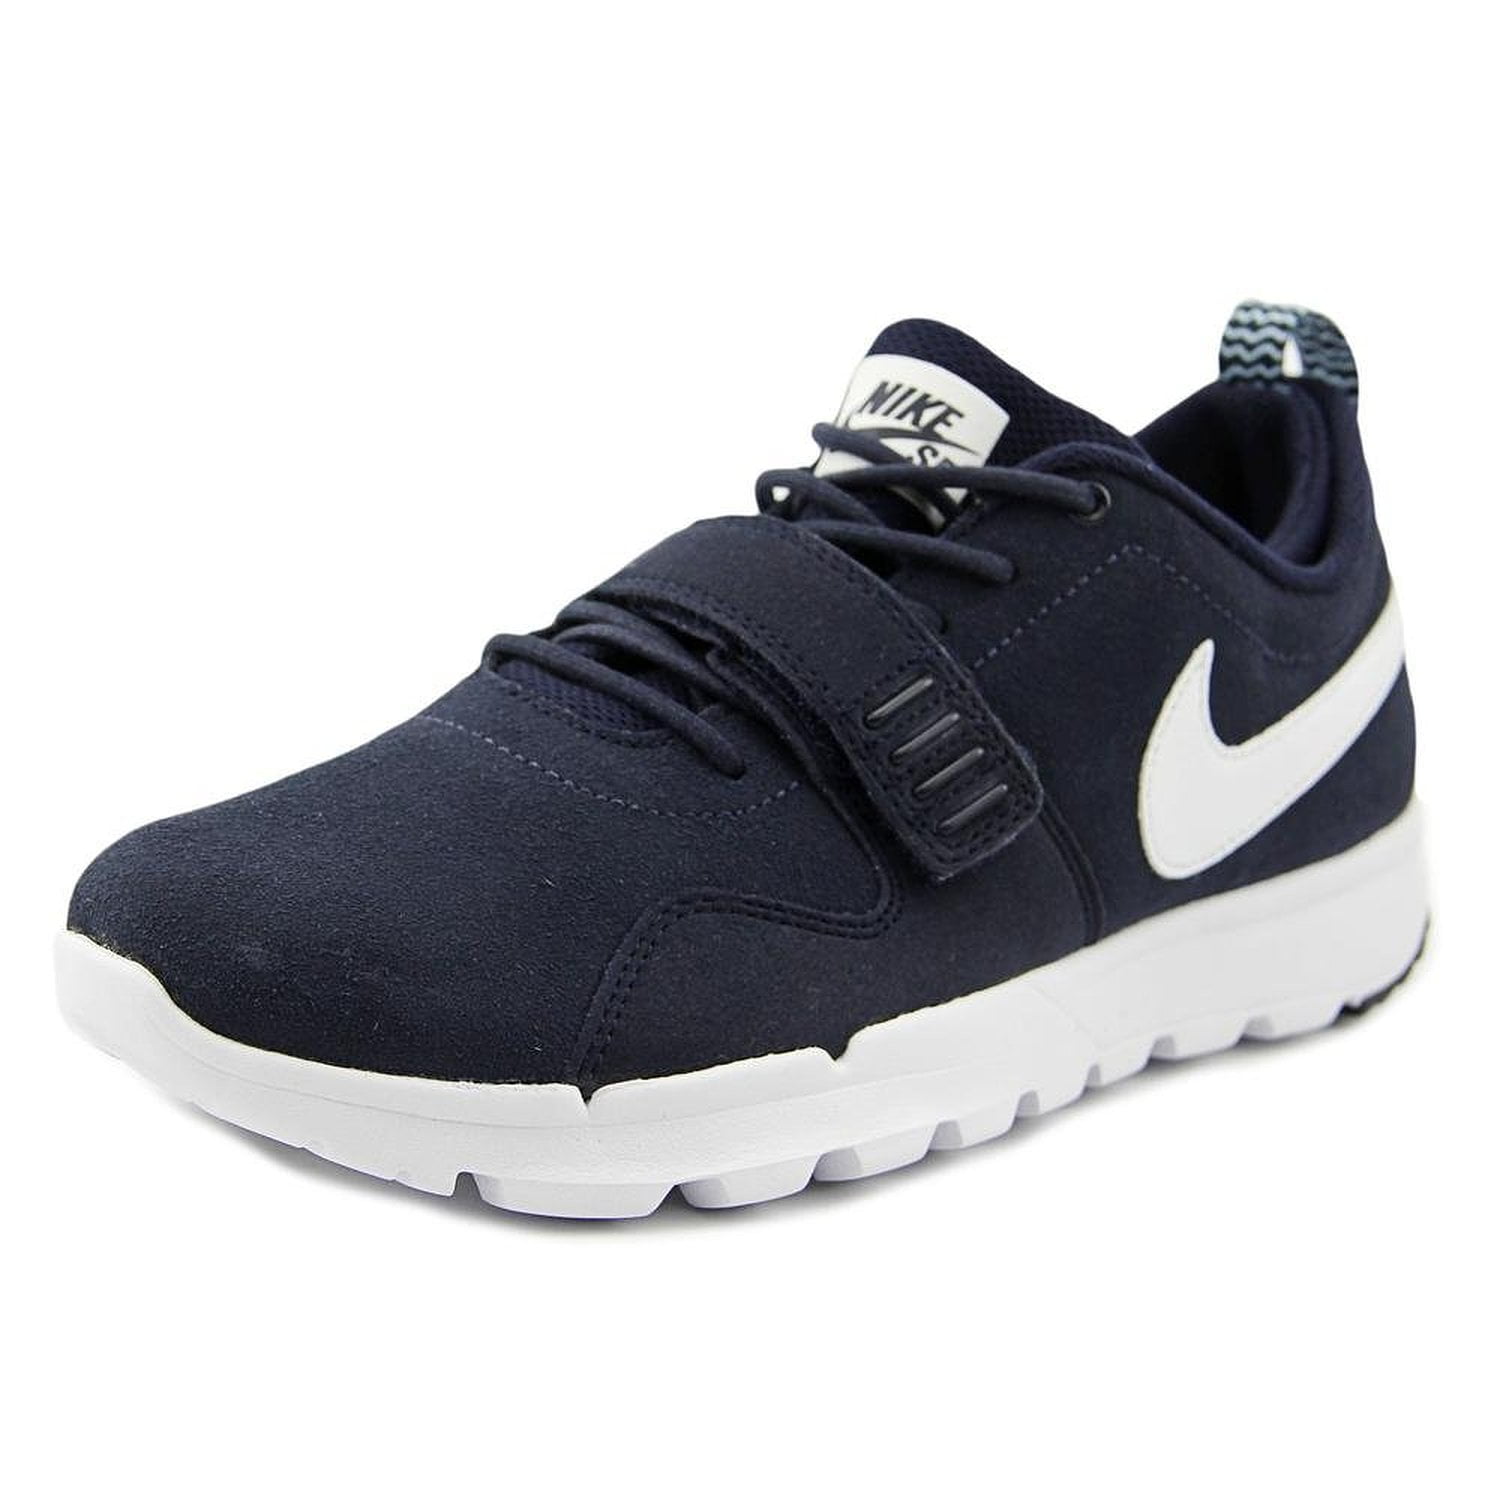 Nike Trainerendor L Blue Trail Shoes - Walmart.com